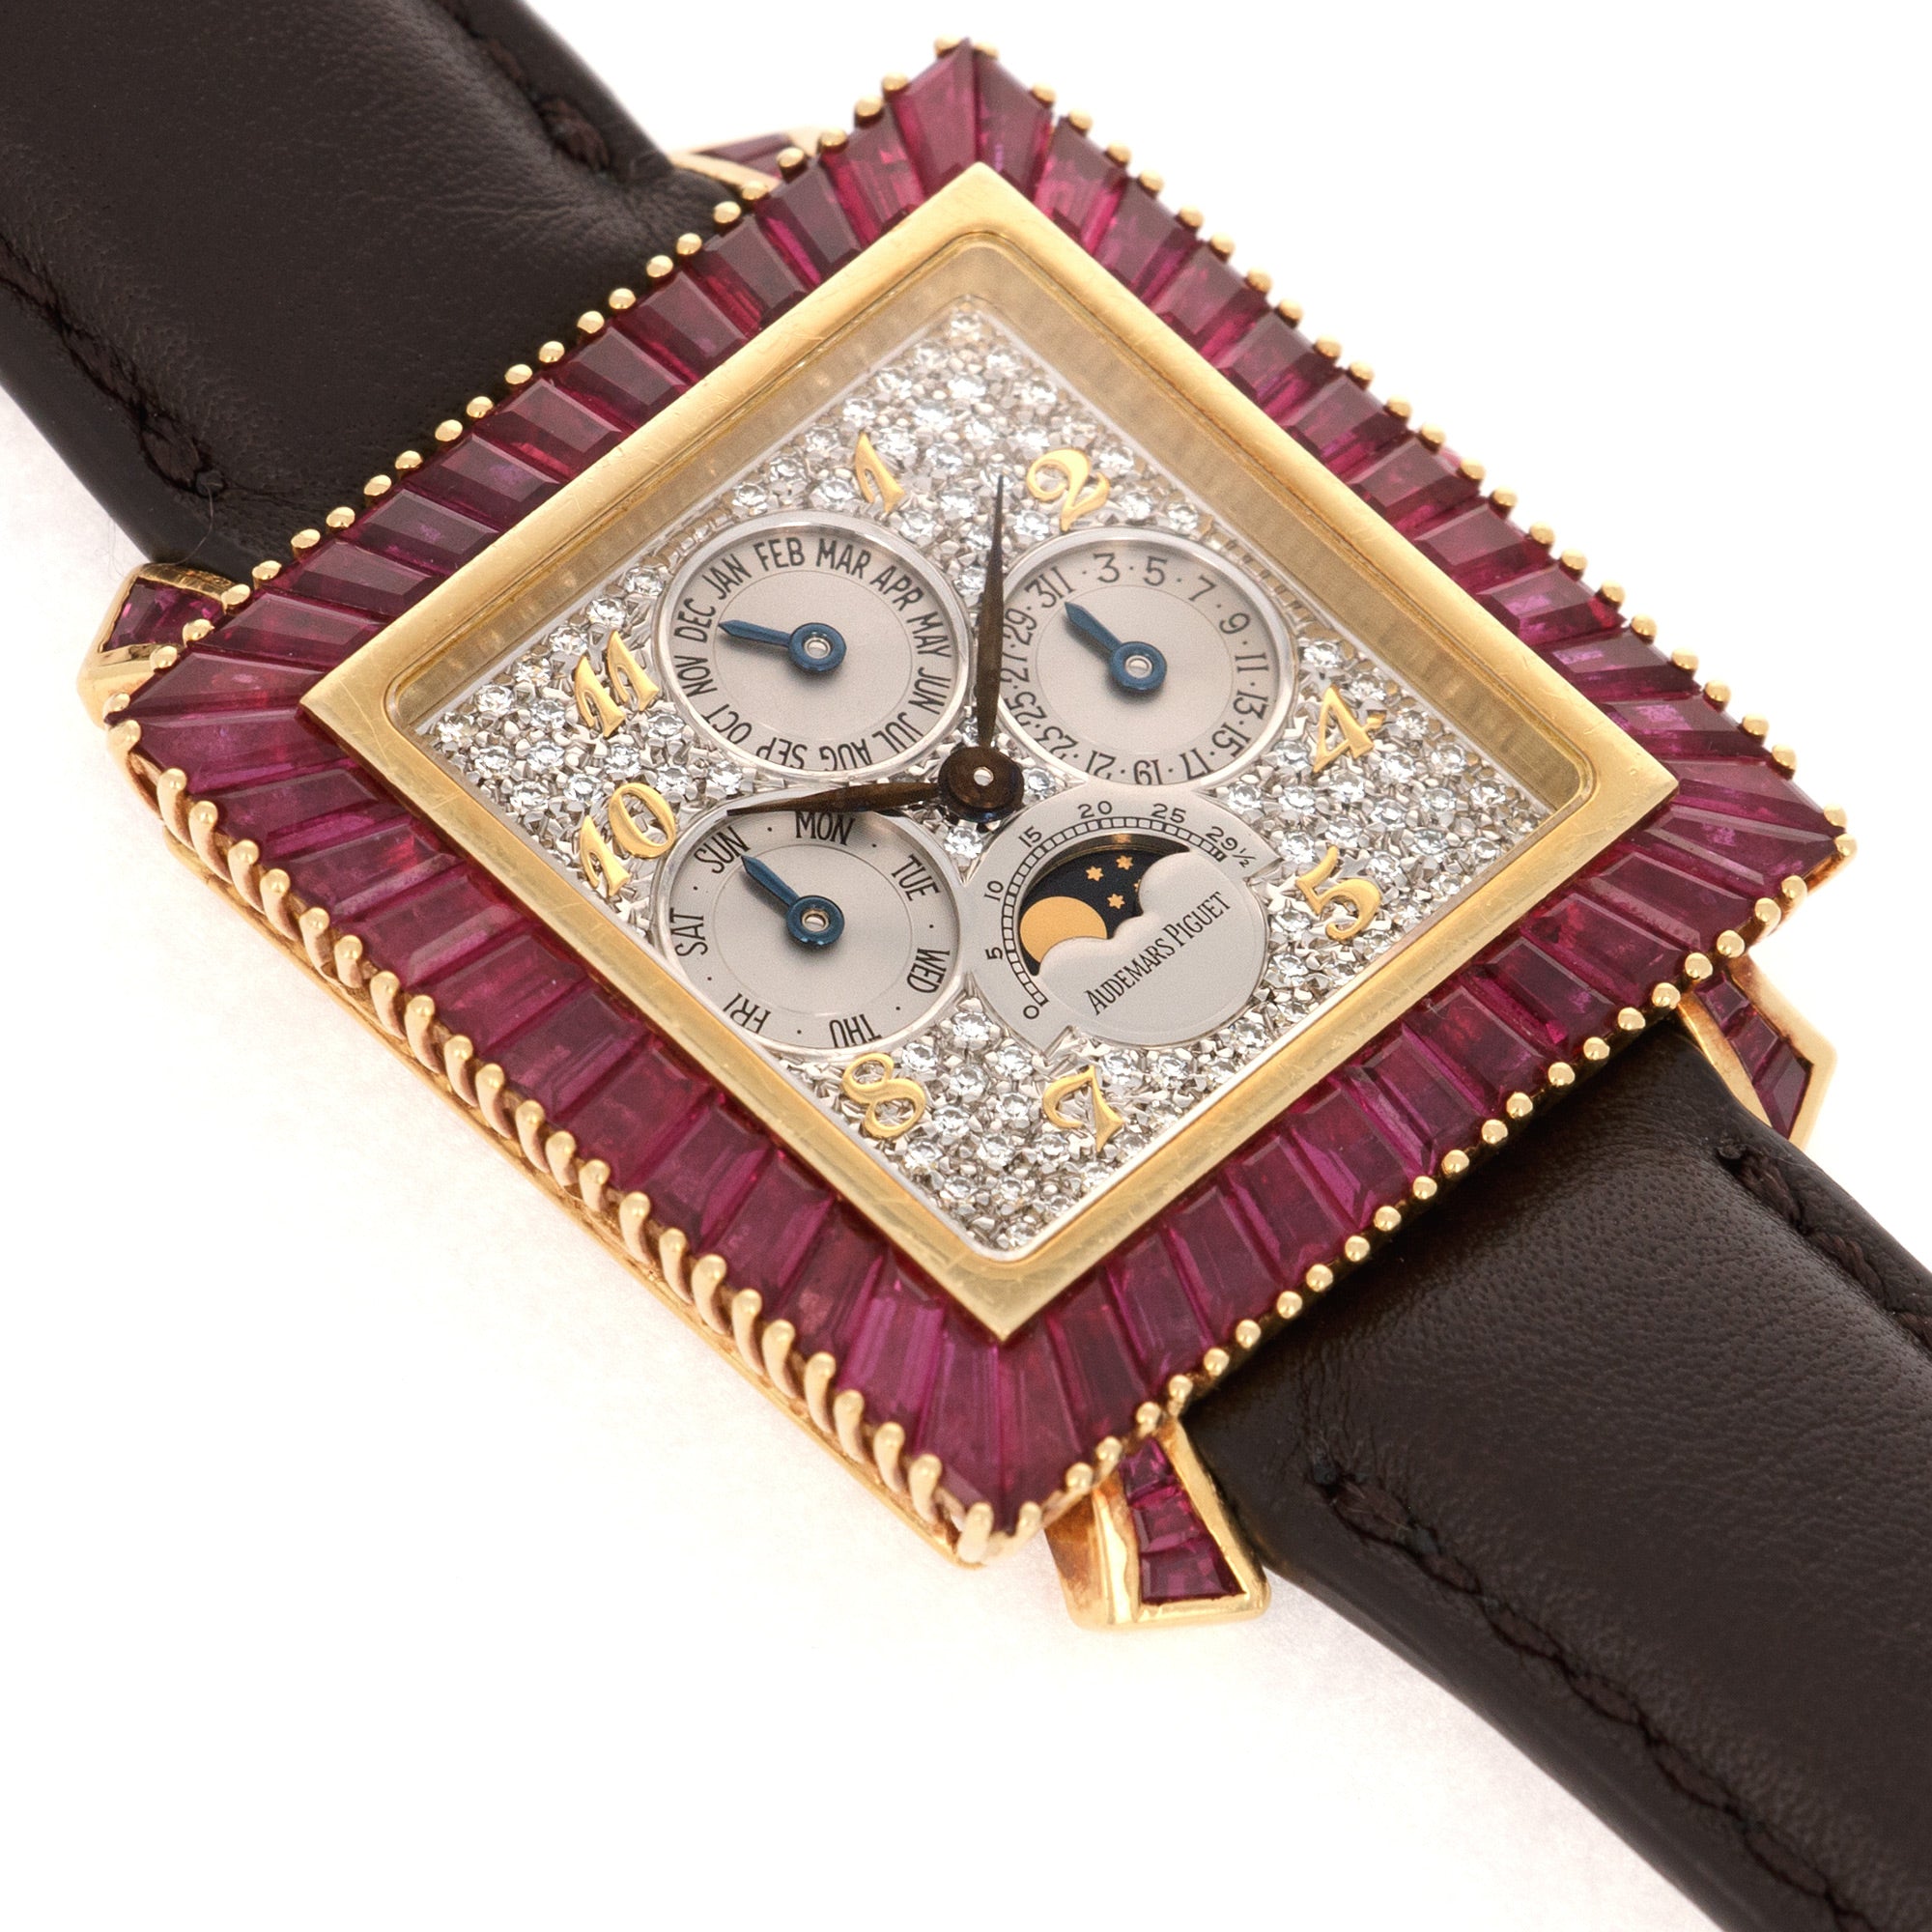 Audemars Piguet - Audemars Piguet Yellow Gold Perpetual Calendar Ruby and Diamond Watch, Likely Piece Unique - The Keystone Watches